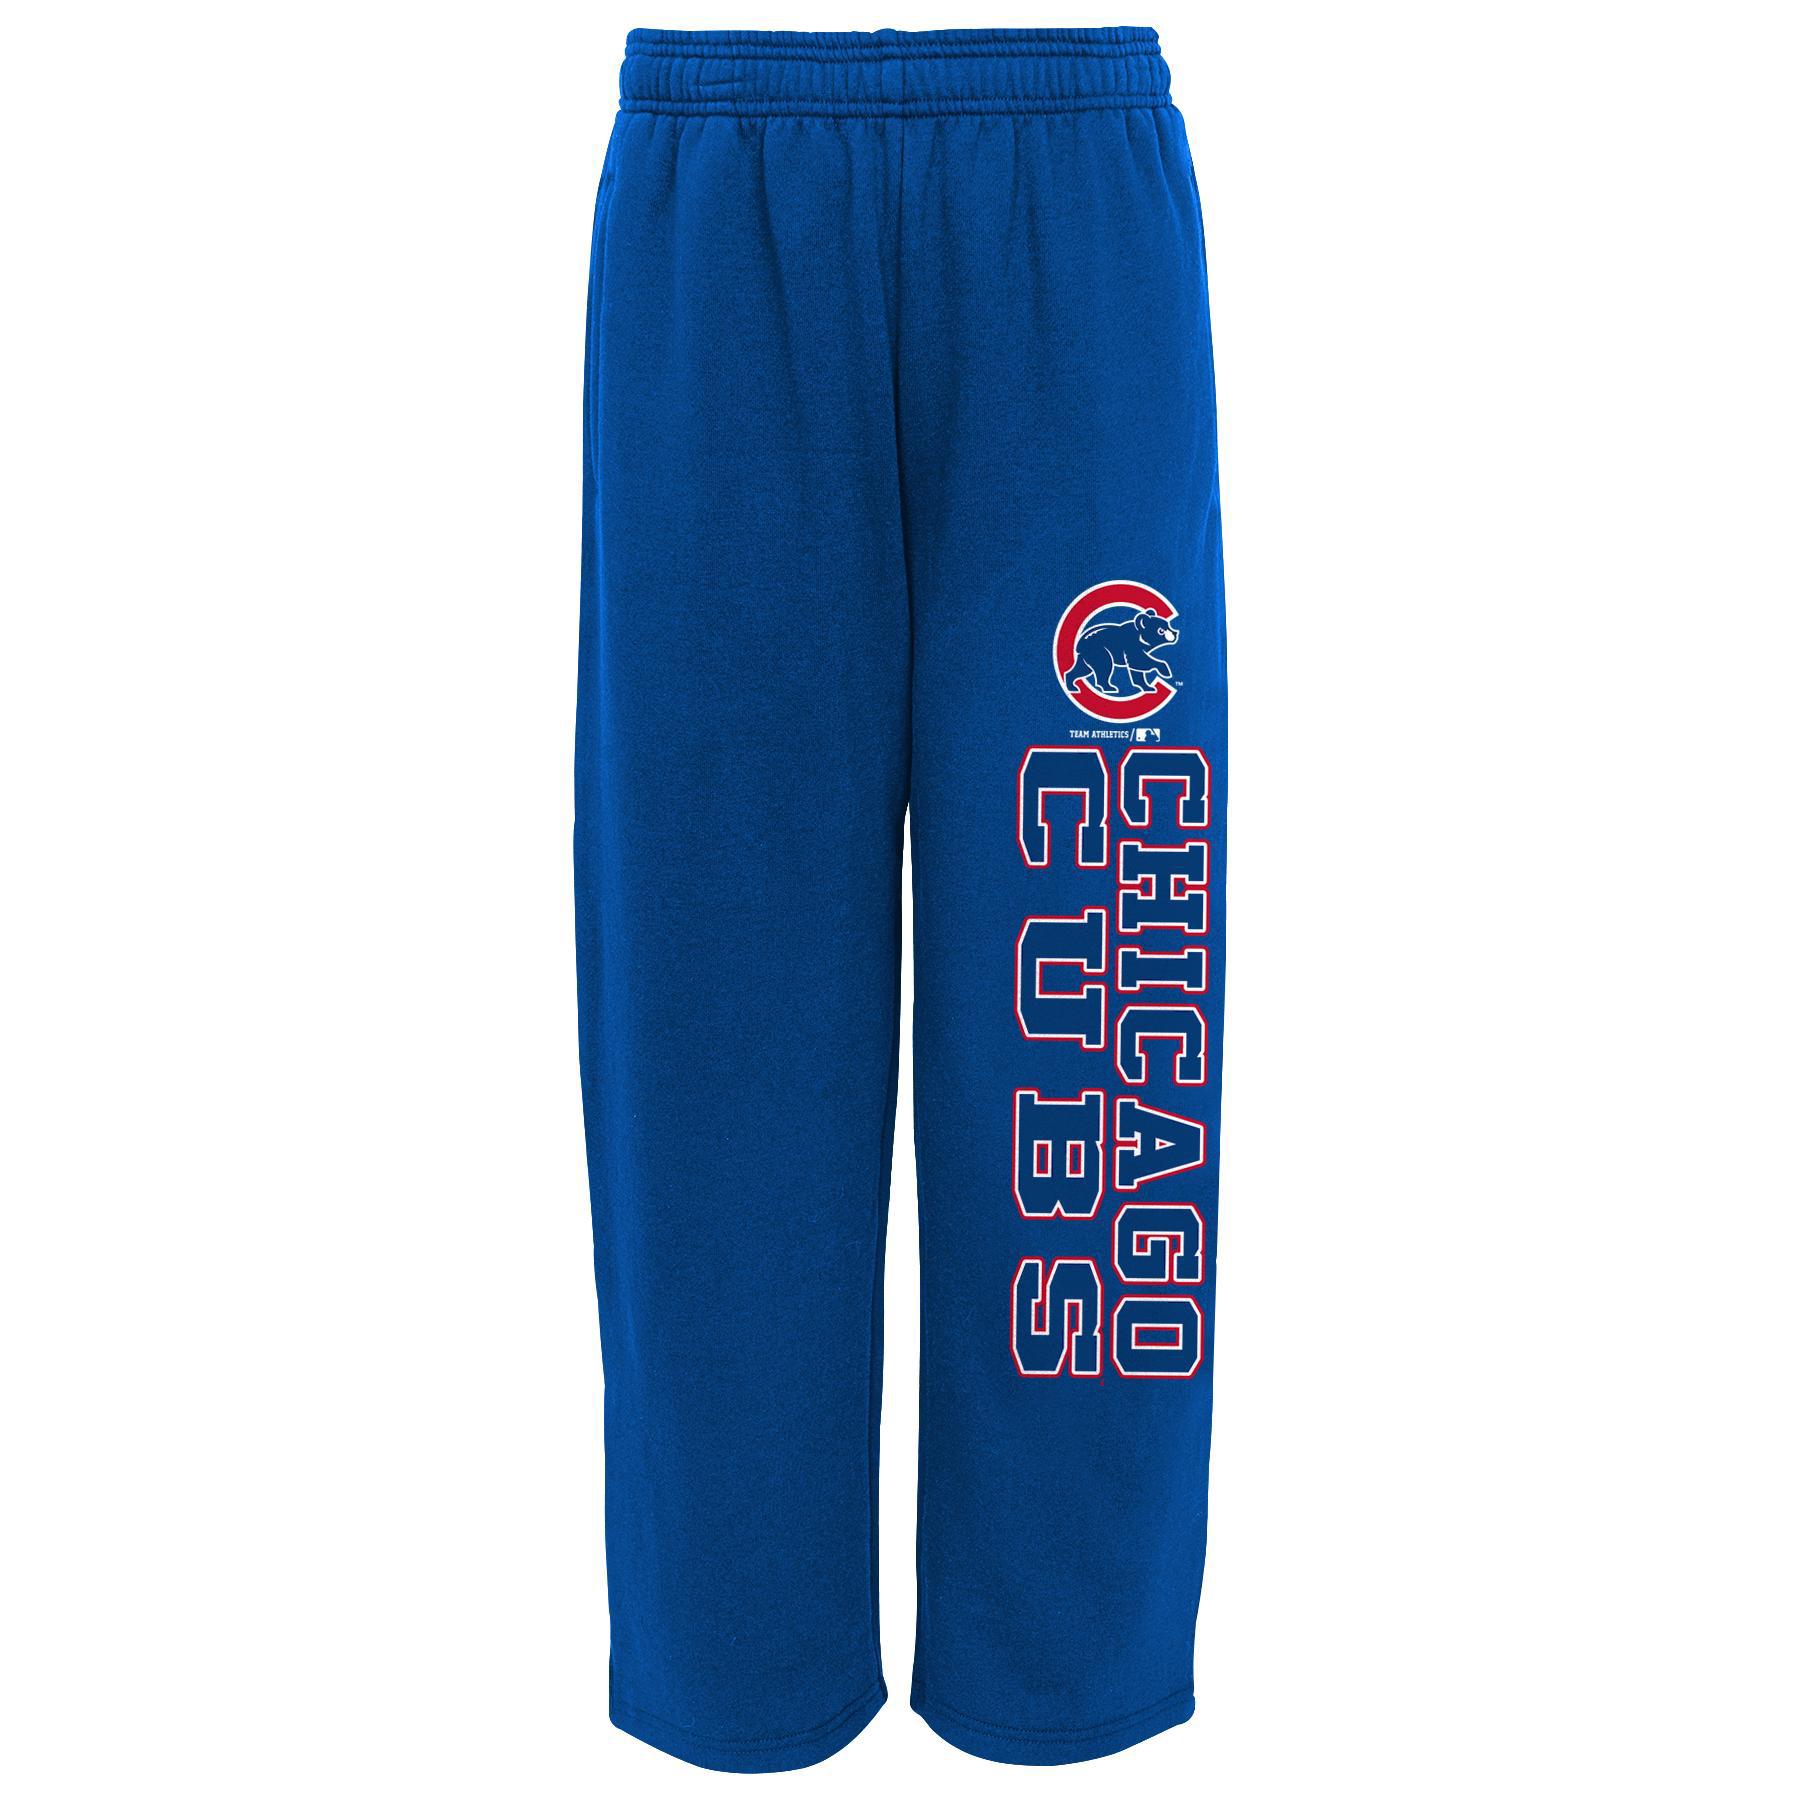 MLB Boys' Sweatpants - Chicago Cubs